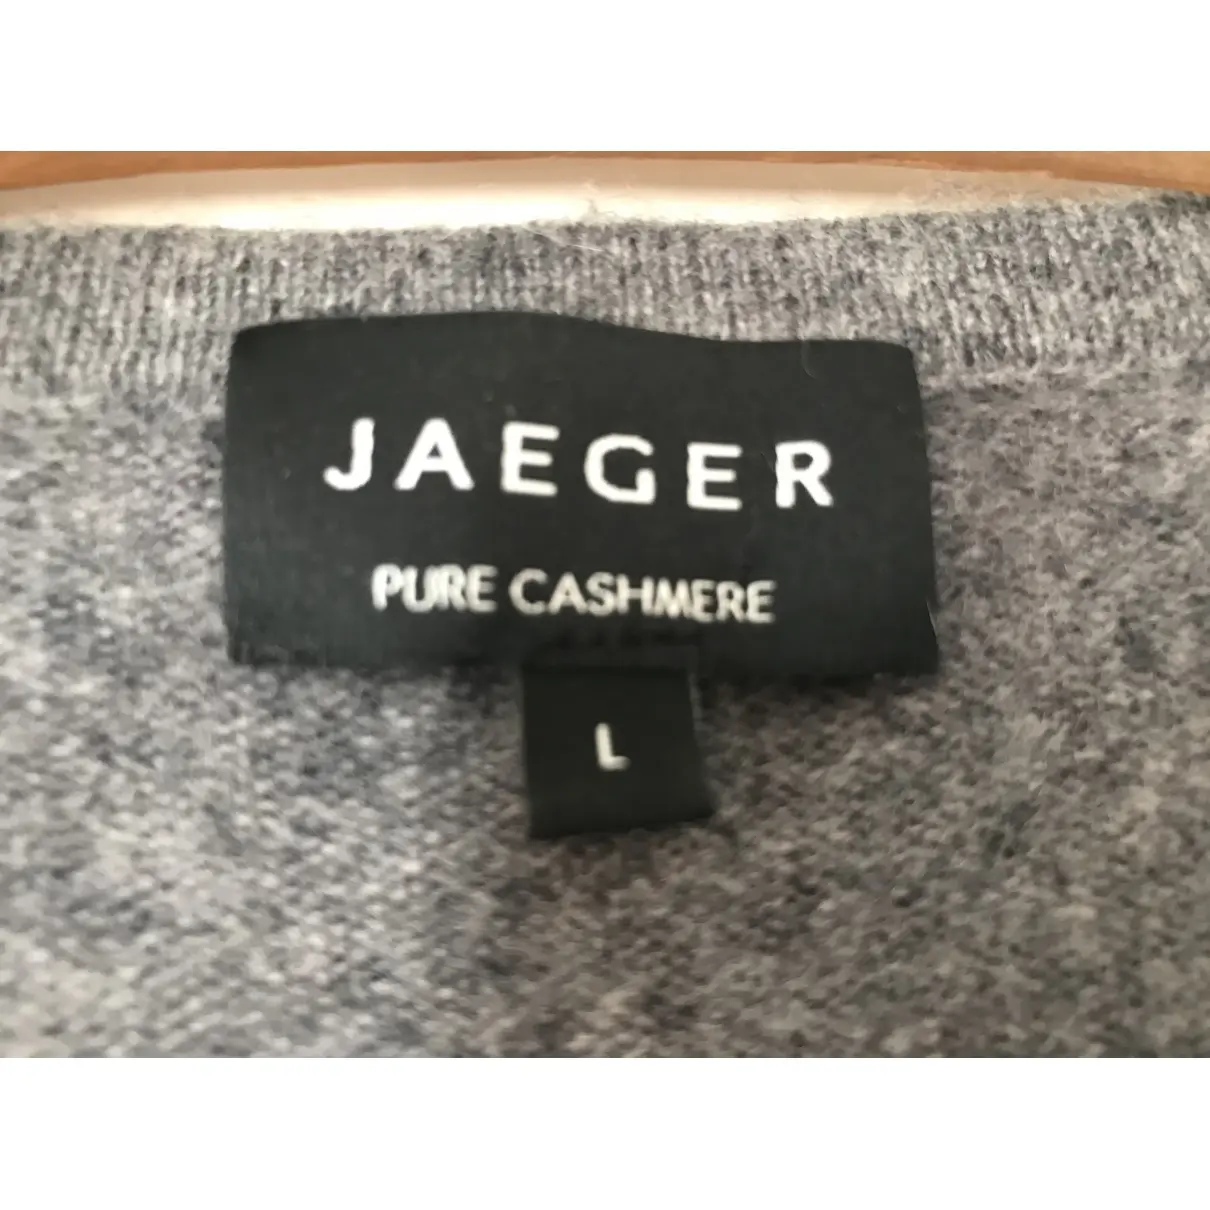 Buy Jaeger Cashmere cardigan online